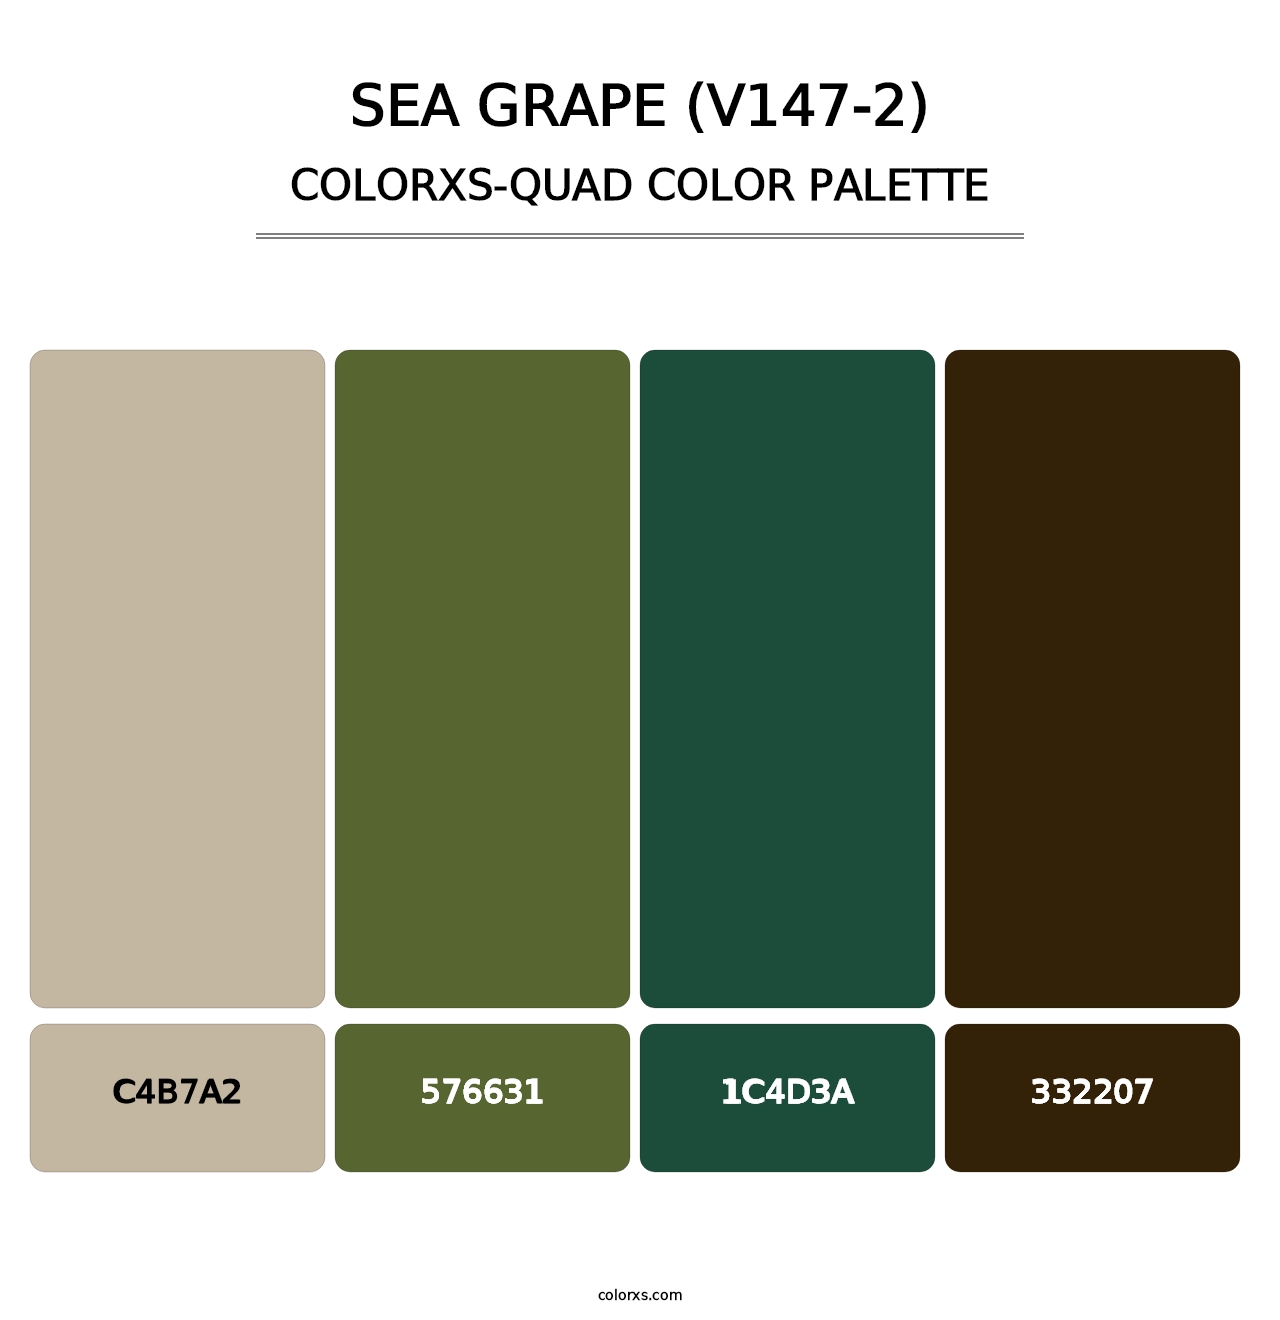 Sea Grape (V147-2) - Colorxs Quad Palette